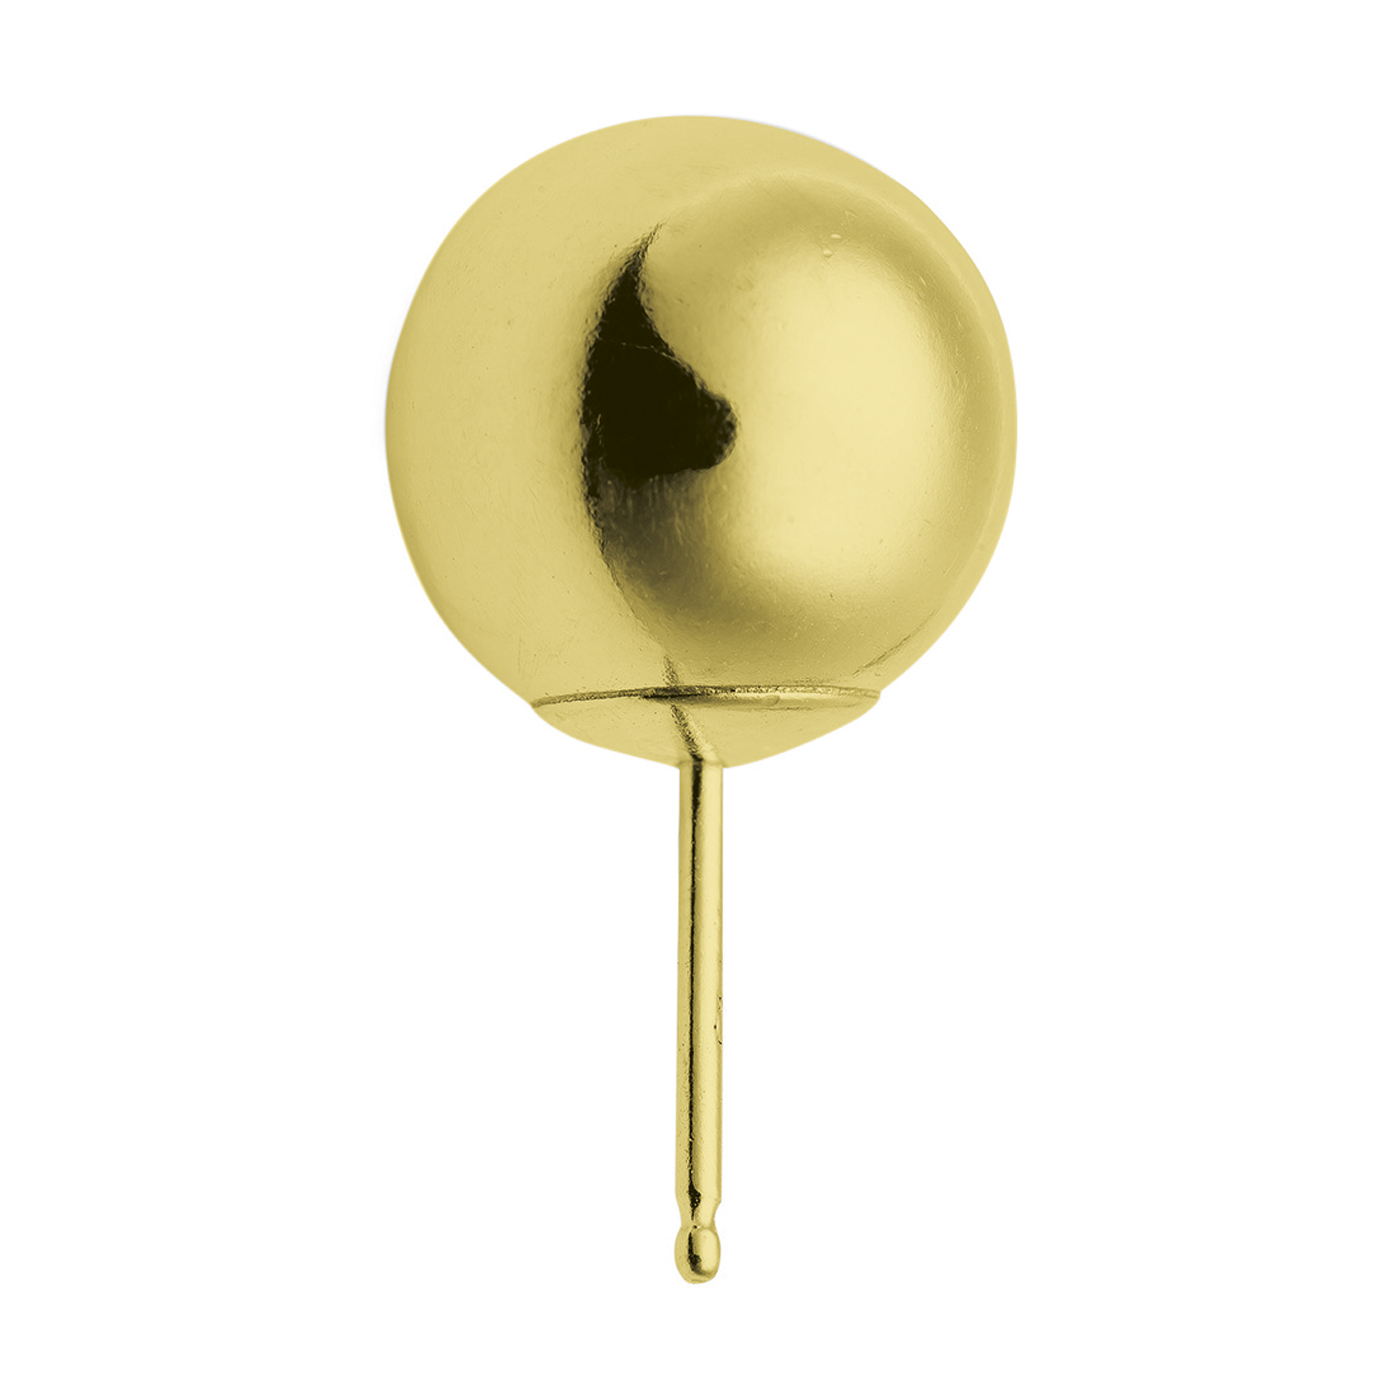 Ball Stud, Rolled Gold, ø 9,5 mm - 1 piece